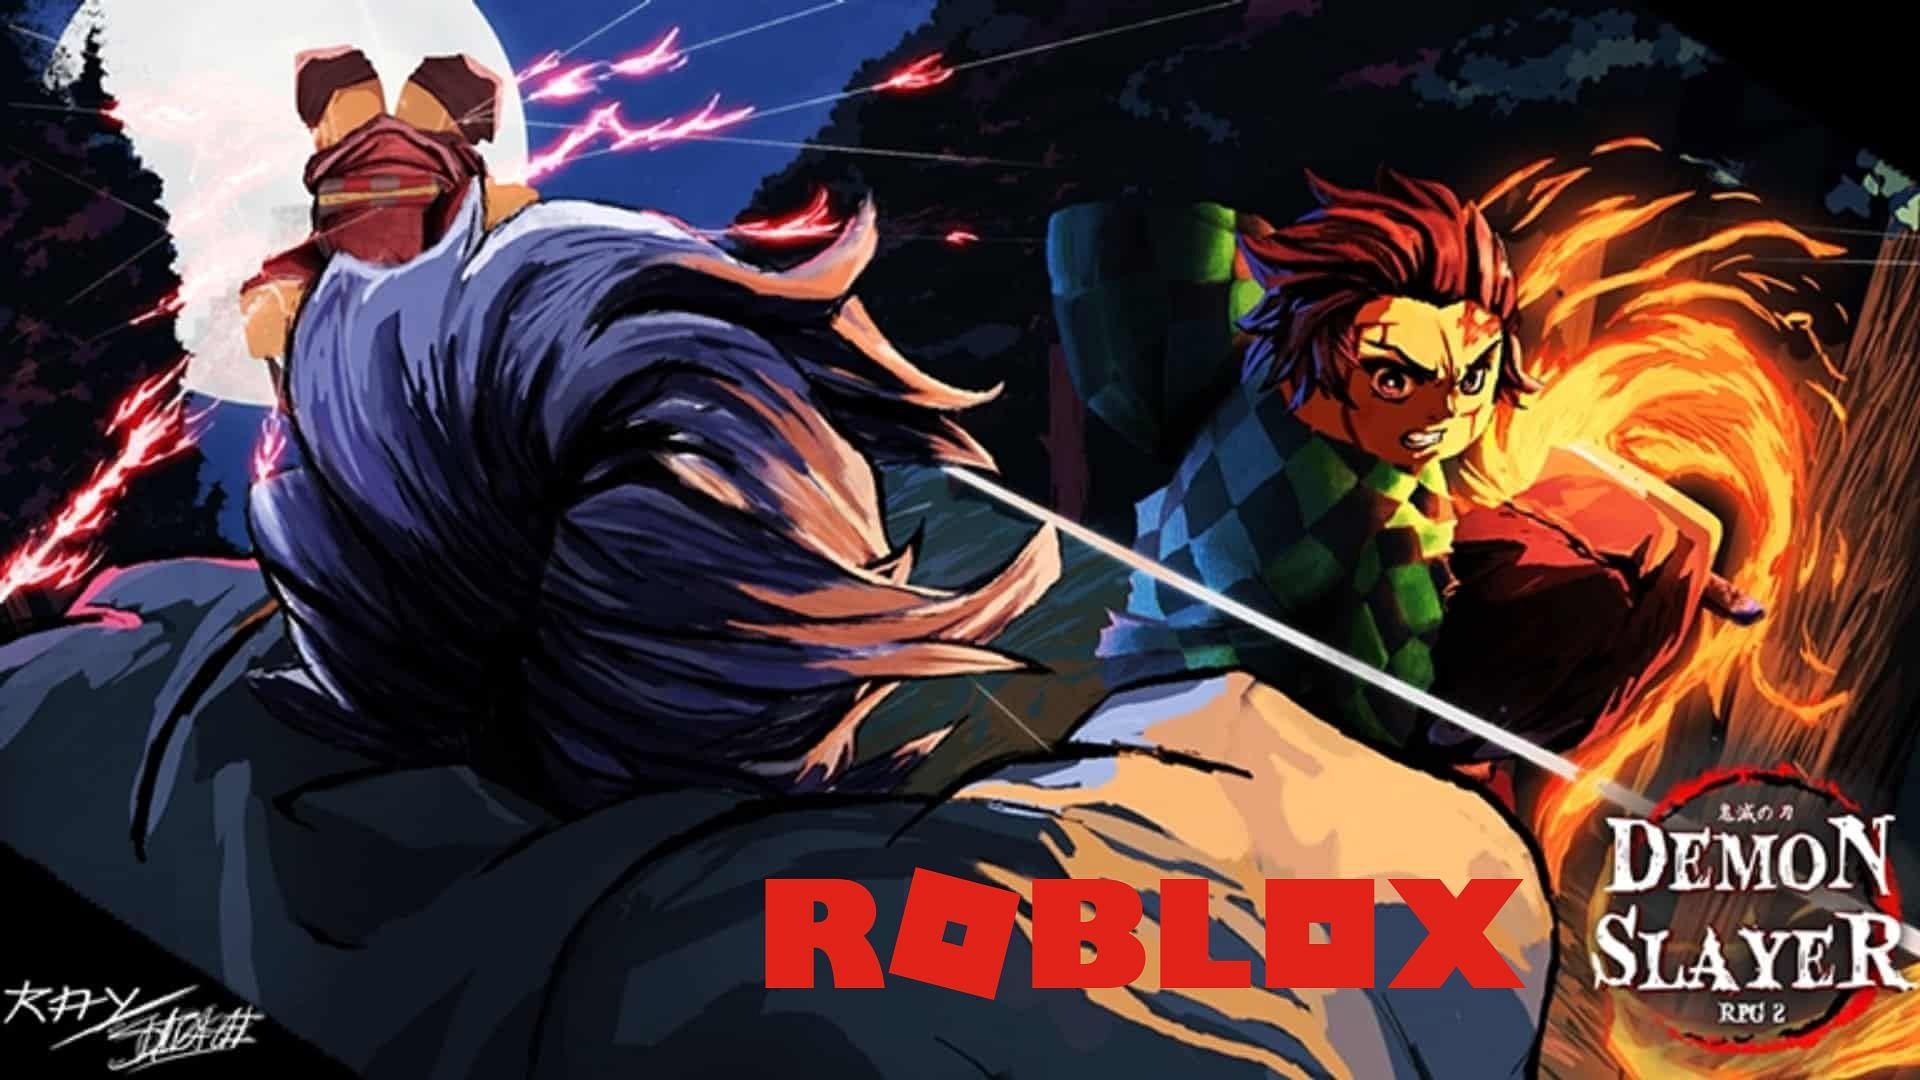 Roblox Demon Slayer RPG 2 Codes (February 2023)